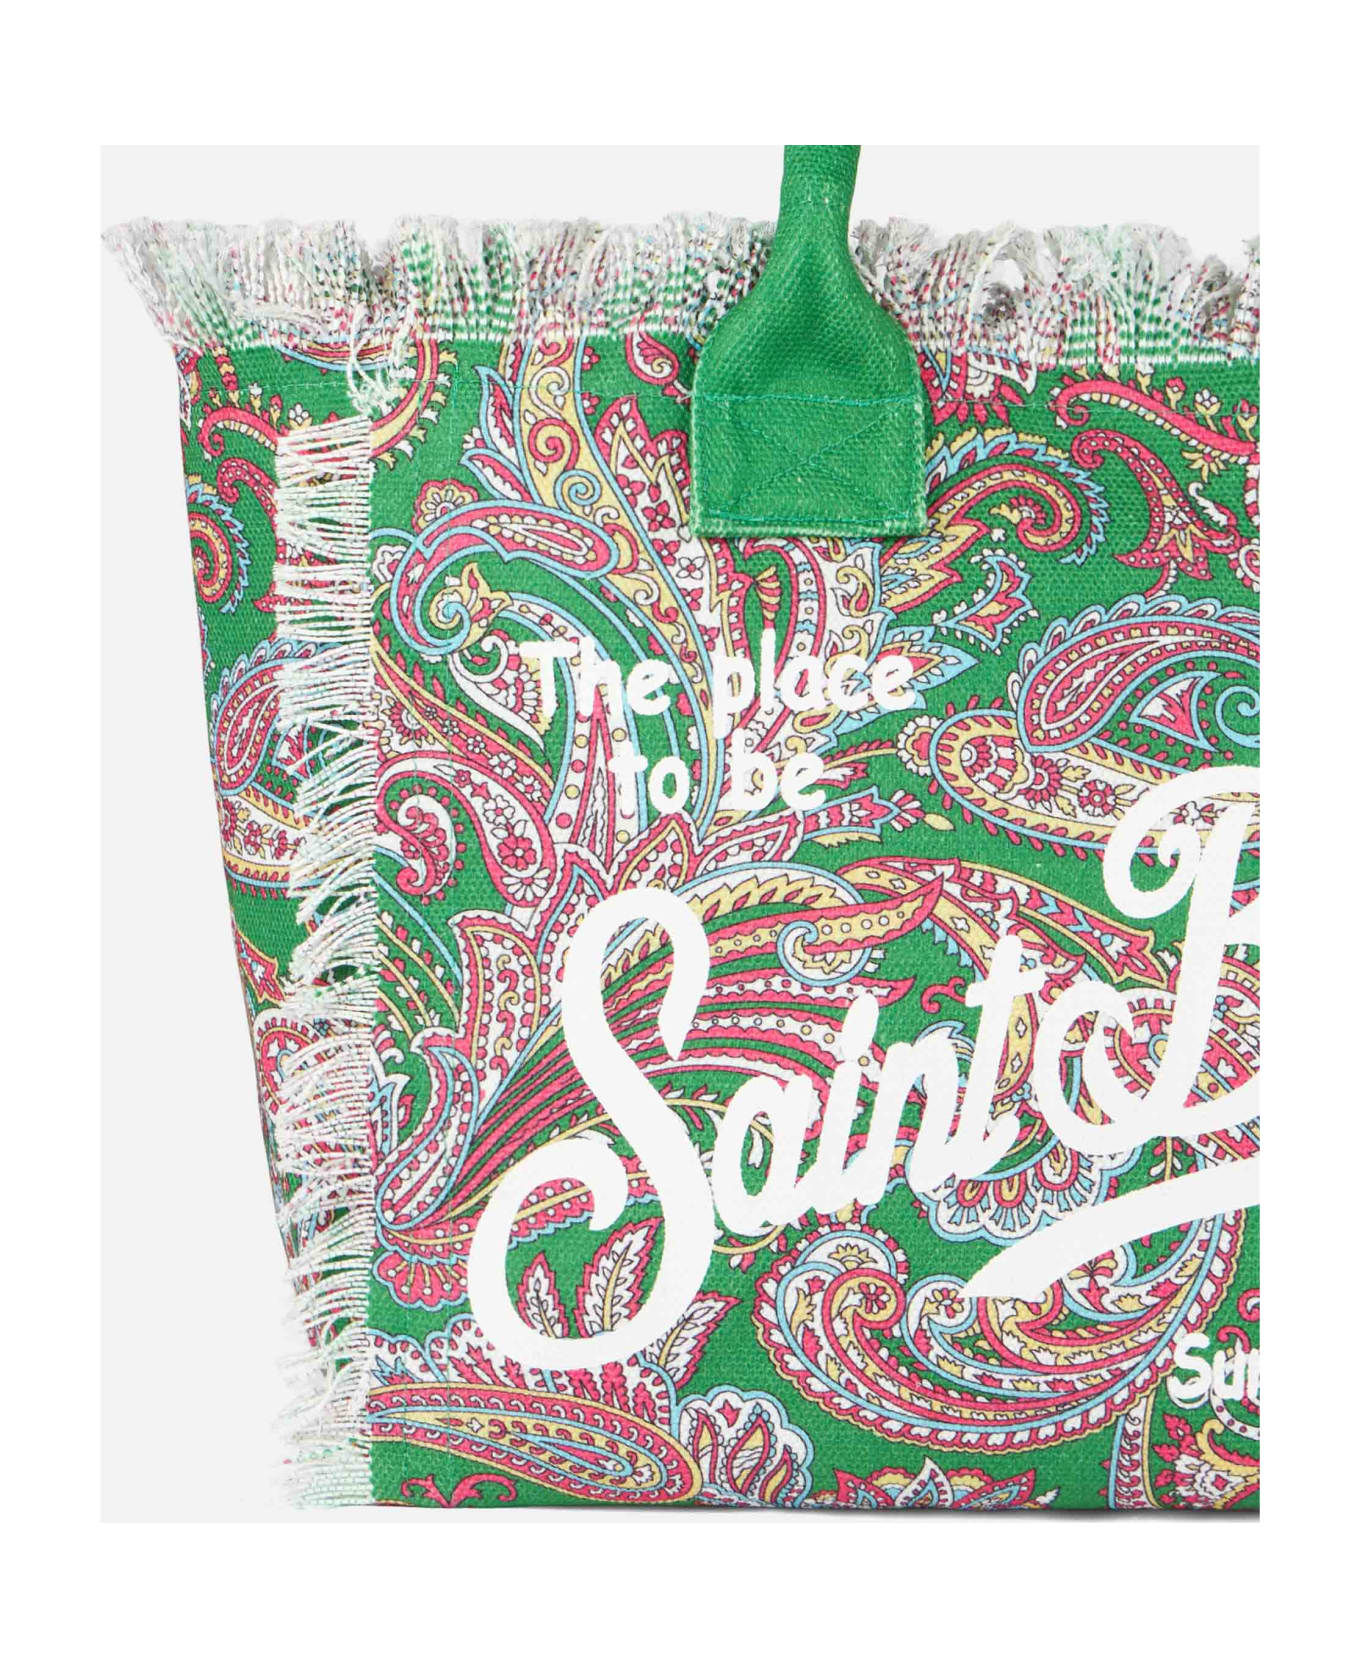 MC2 Saint Barth Vanity Canvas Shoulder Bag With Paisley Print - GREEN トートバッグ